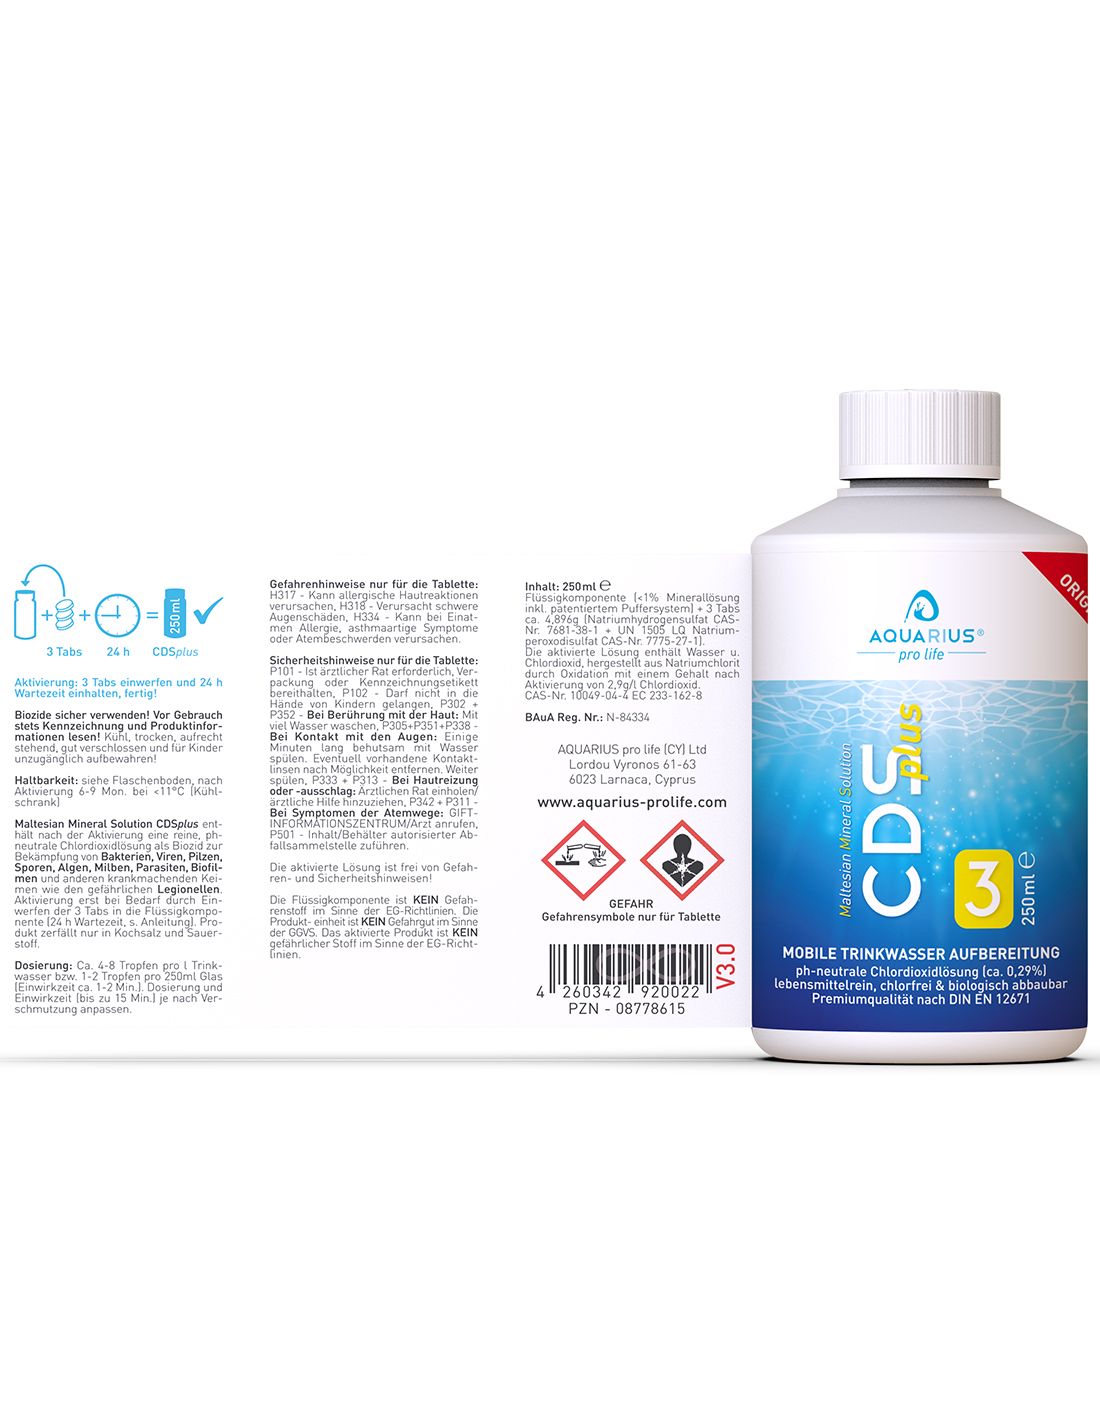 AQUARIUS pro life - CDSplus | CDS/CDL Chlordioxid-Lösung